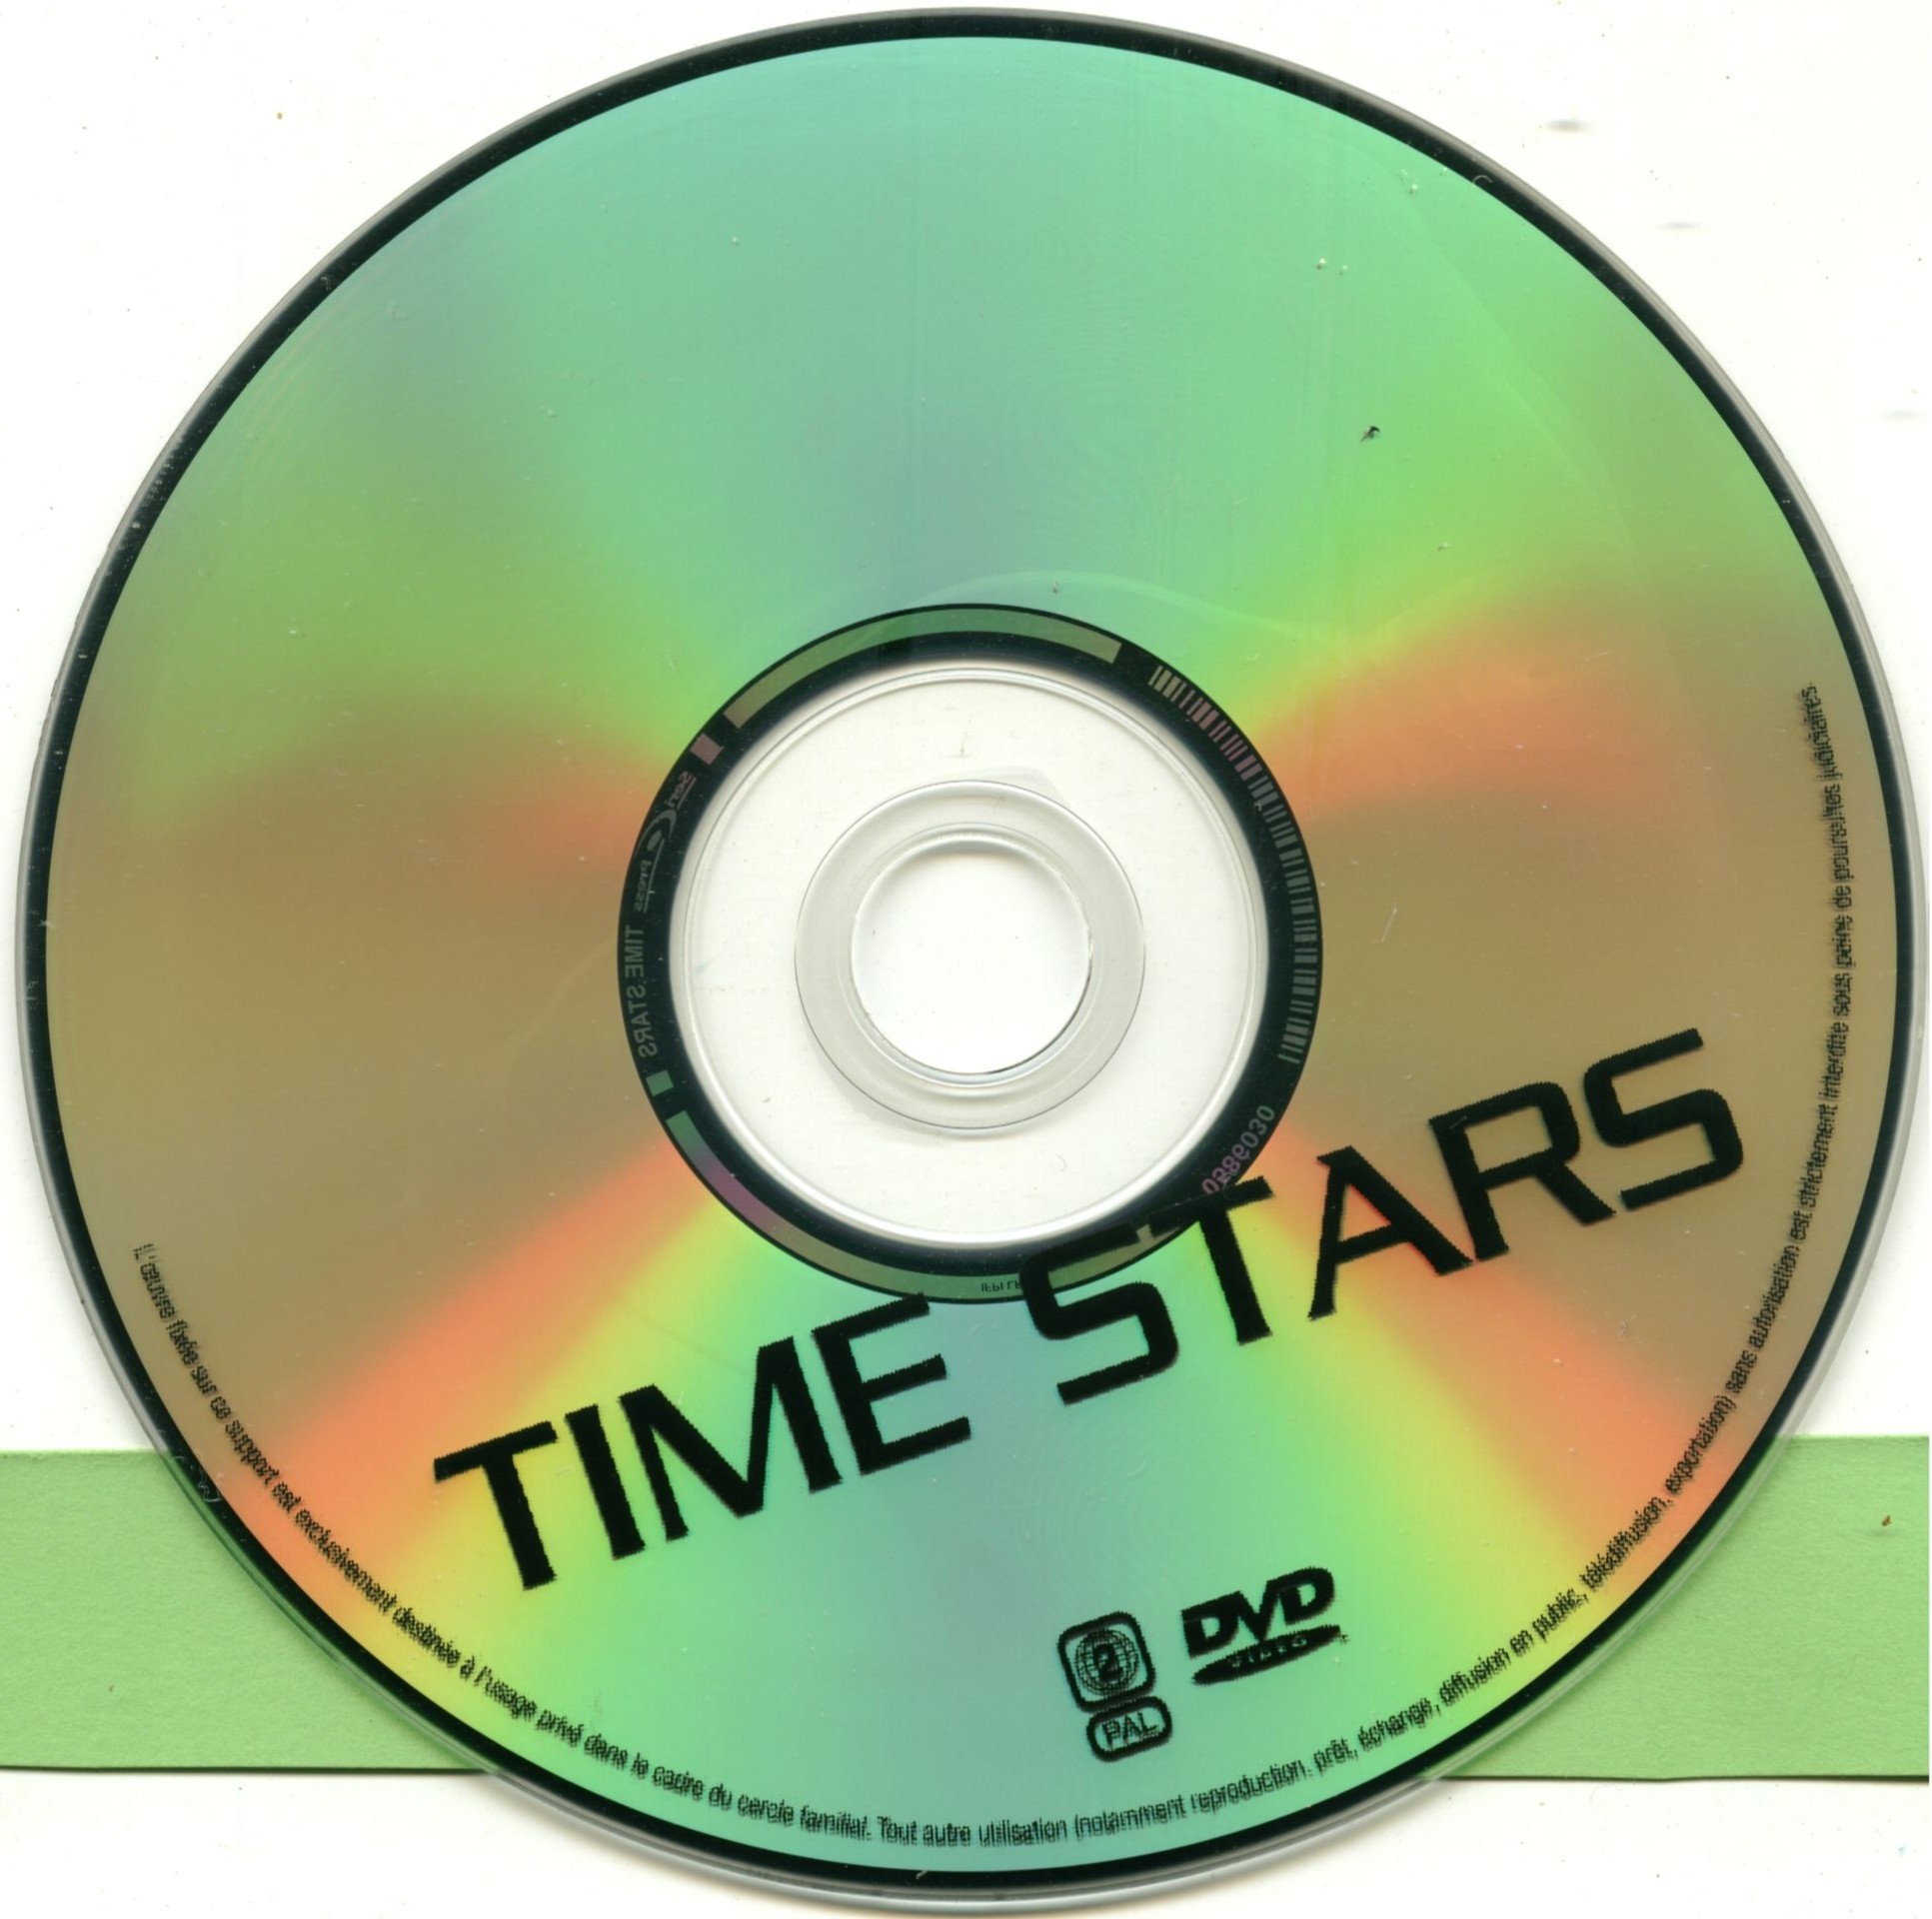 Time stars